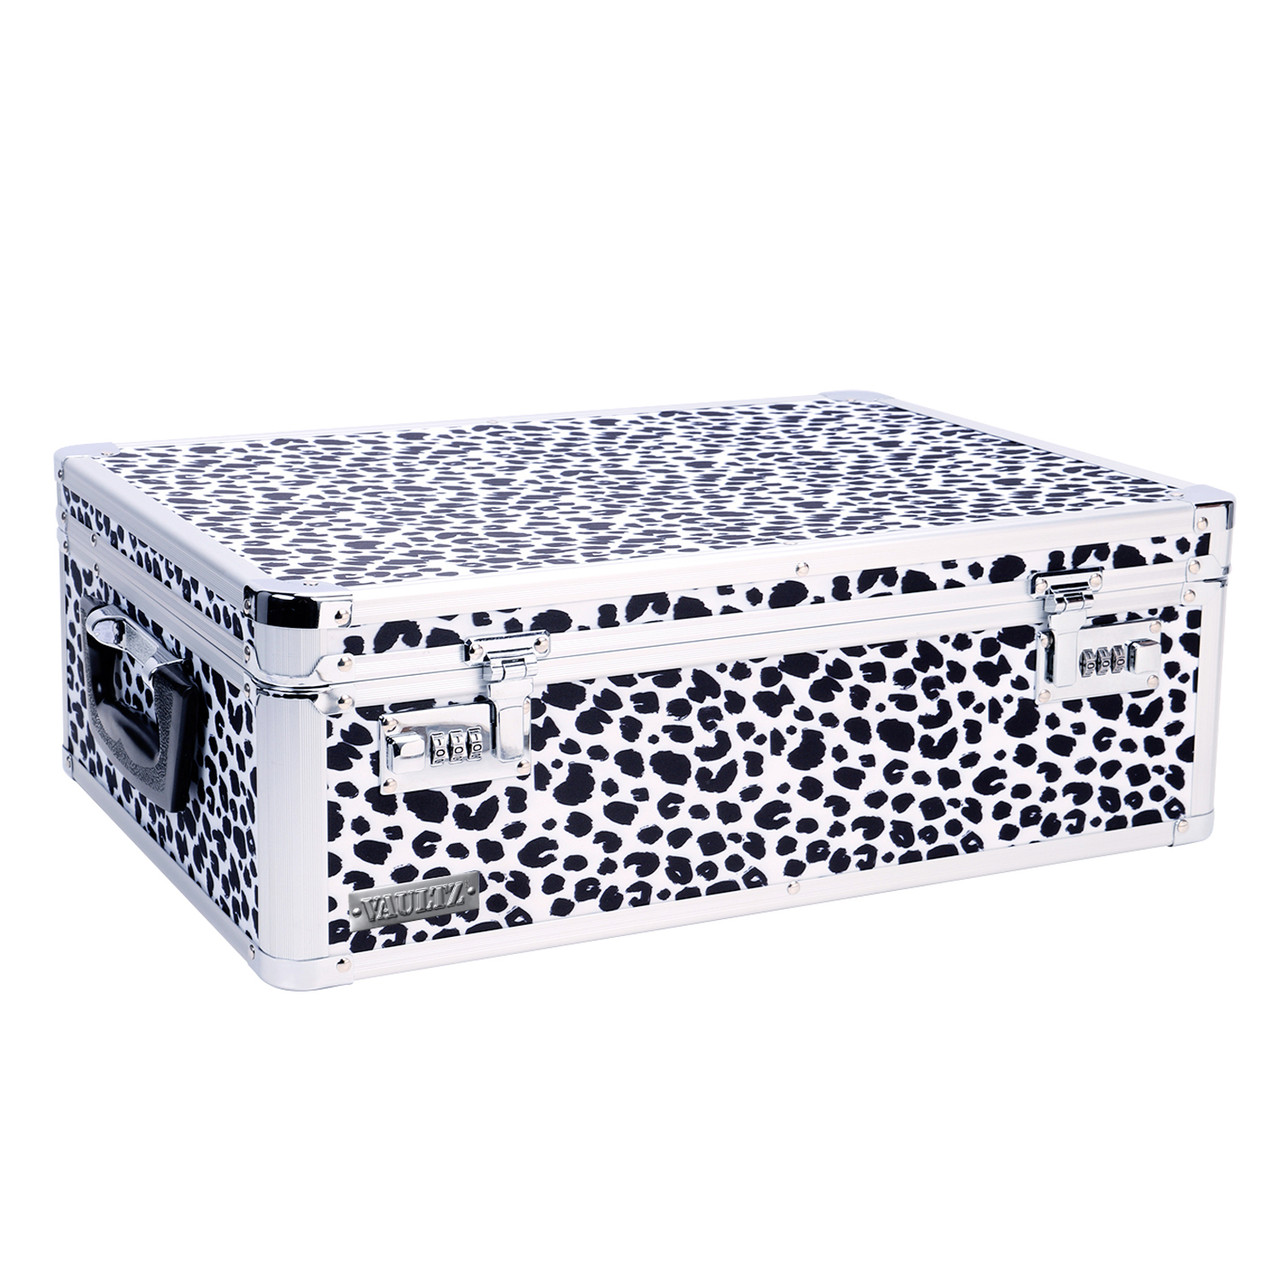 Vaultz Locking 4x6 Index Card File Box, Black & White Leopard